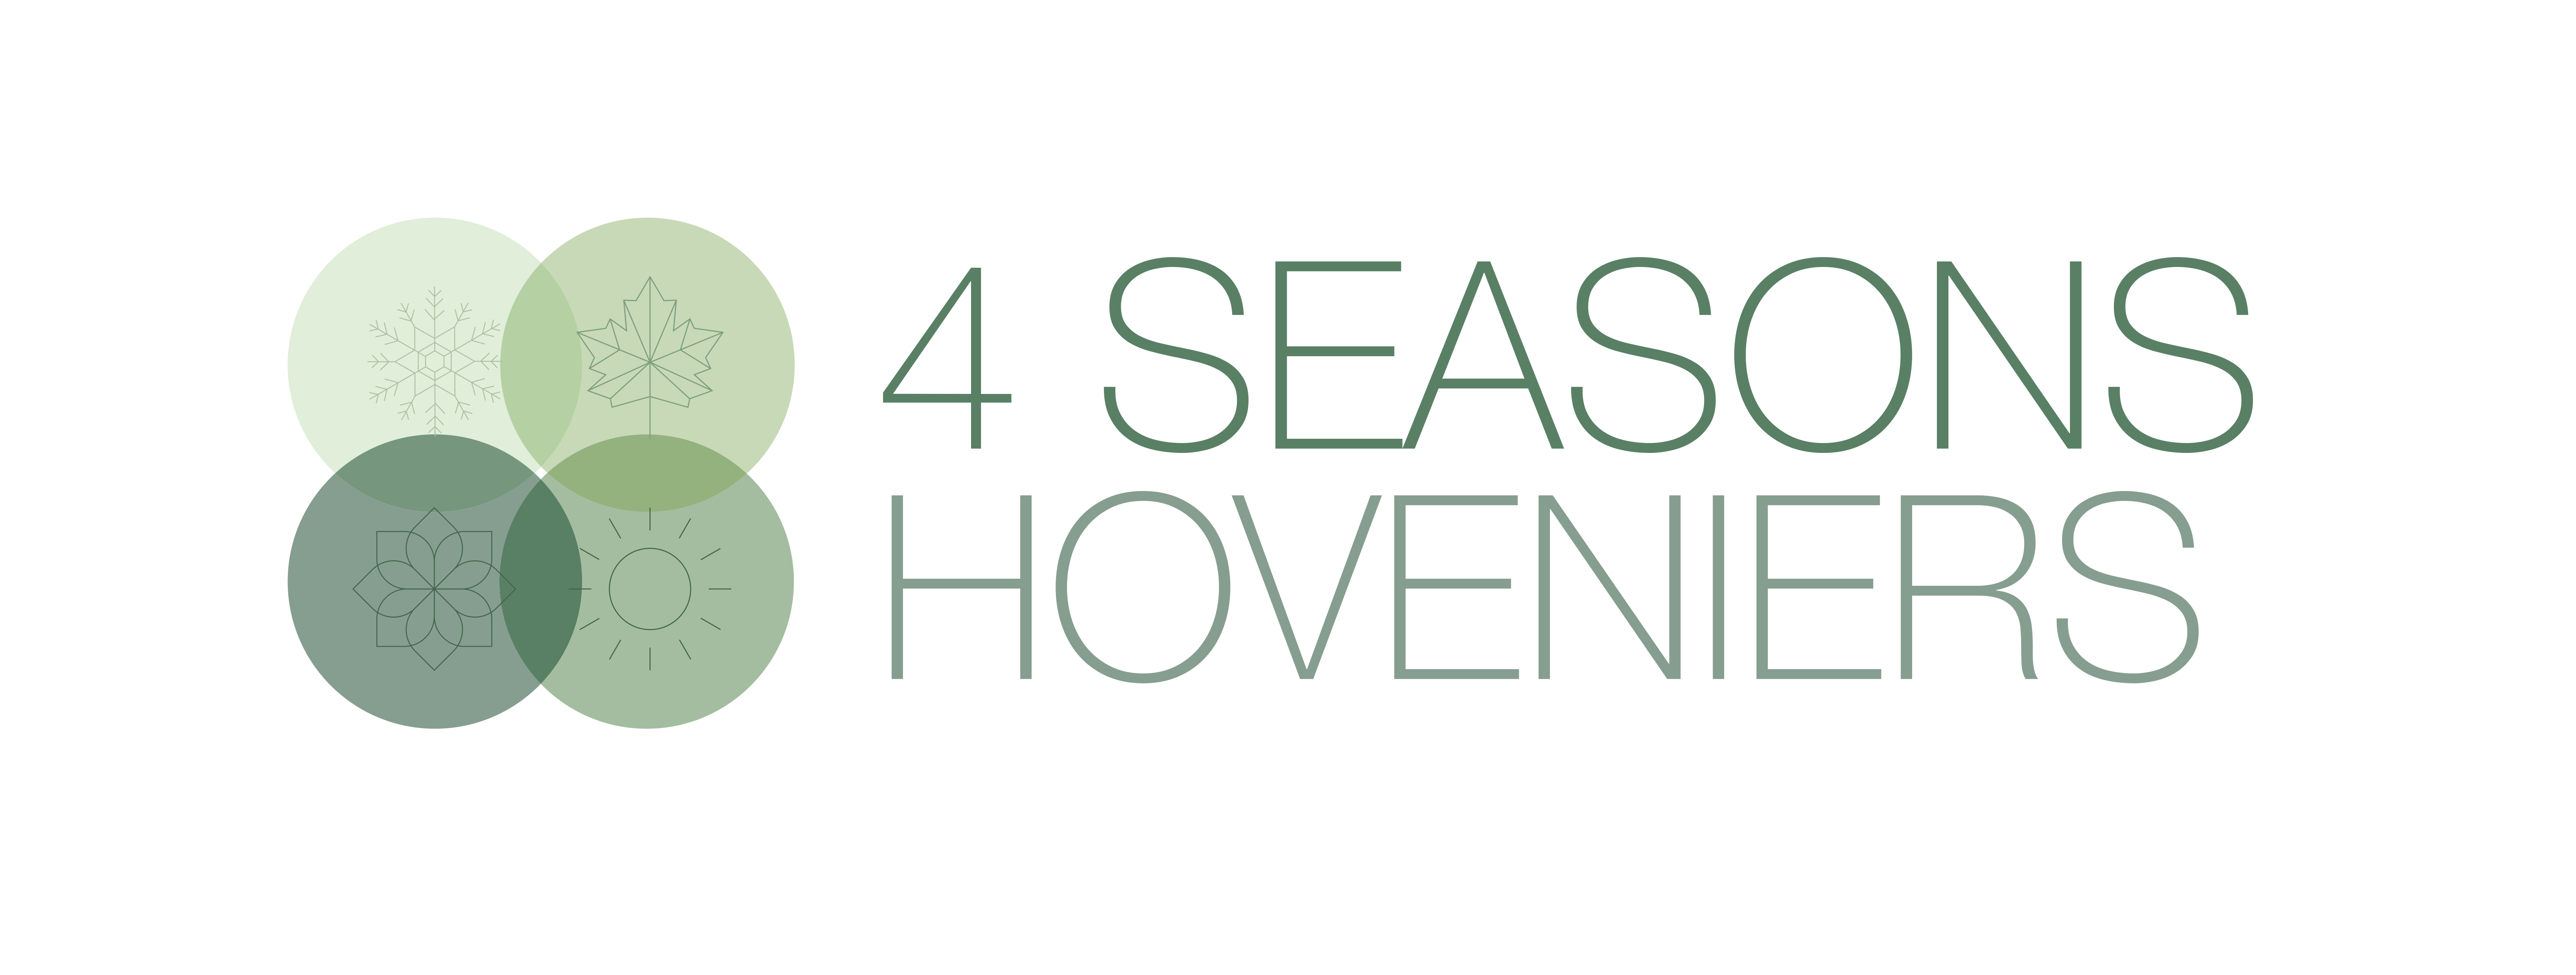 sponsor_4seasons_hoveniers